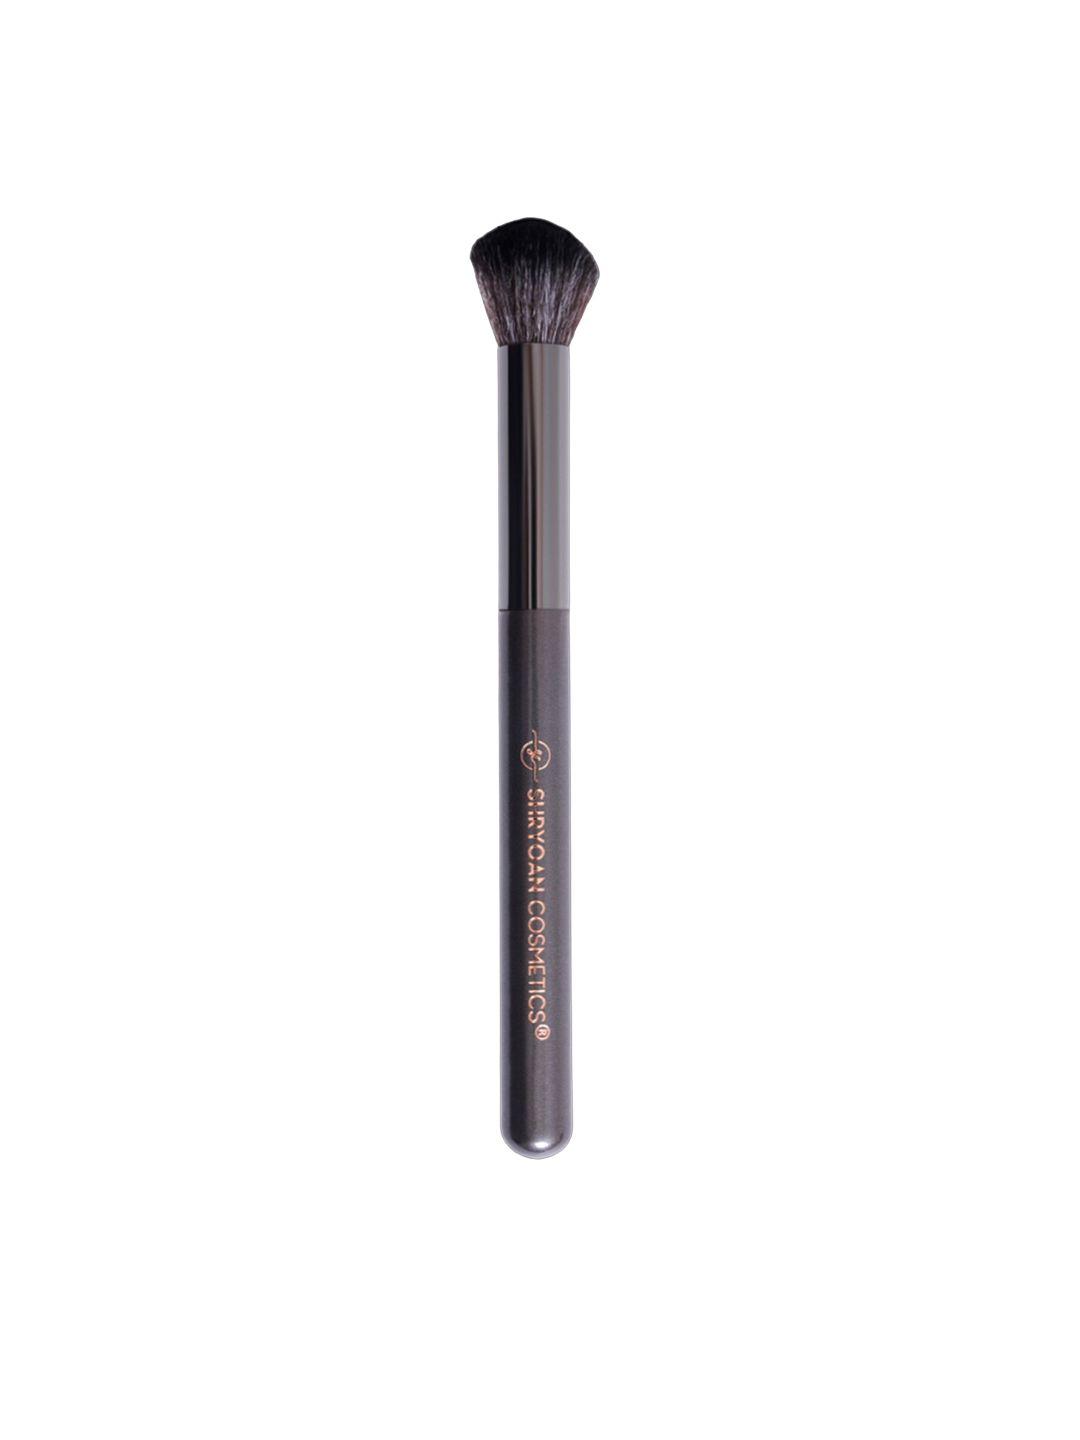 shryoan professional makeup concealer highlighter brush - 03